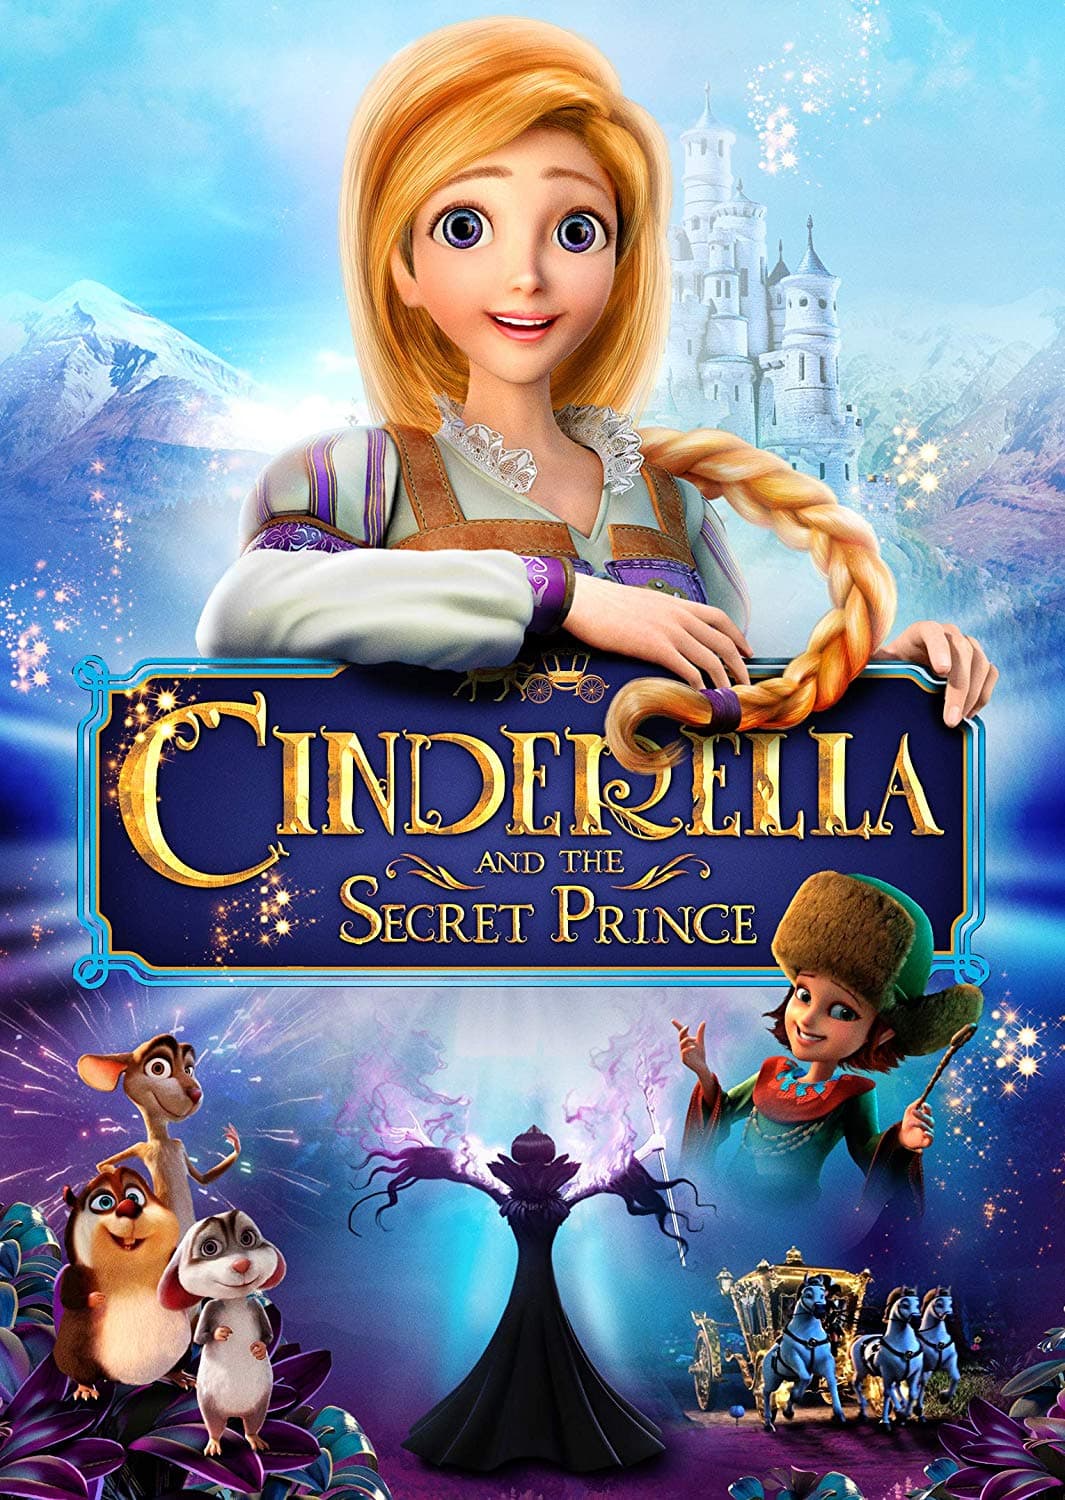 Cinderella and the Secret Prince